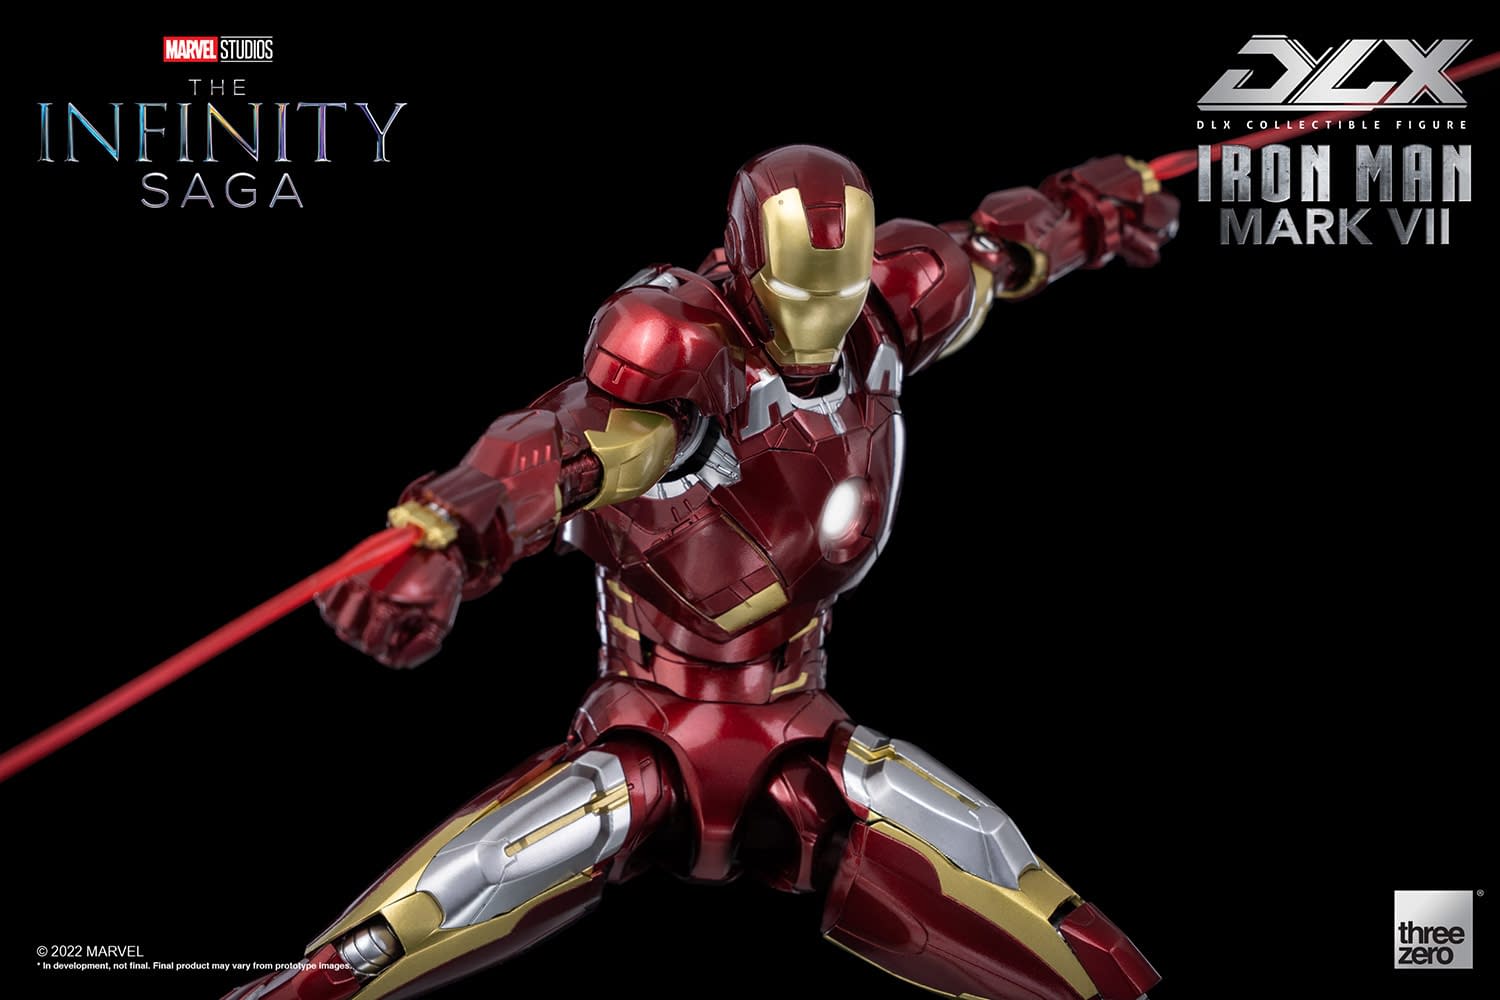 Enhance Your Iron Man Hall of Armor with threezero's Mark 7 DLX Figure